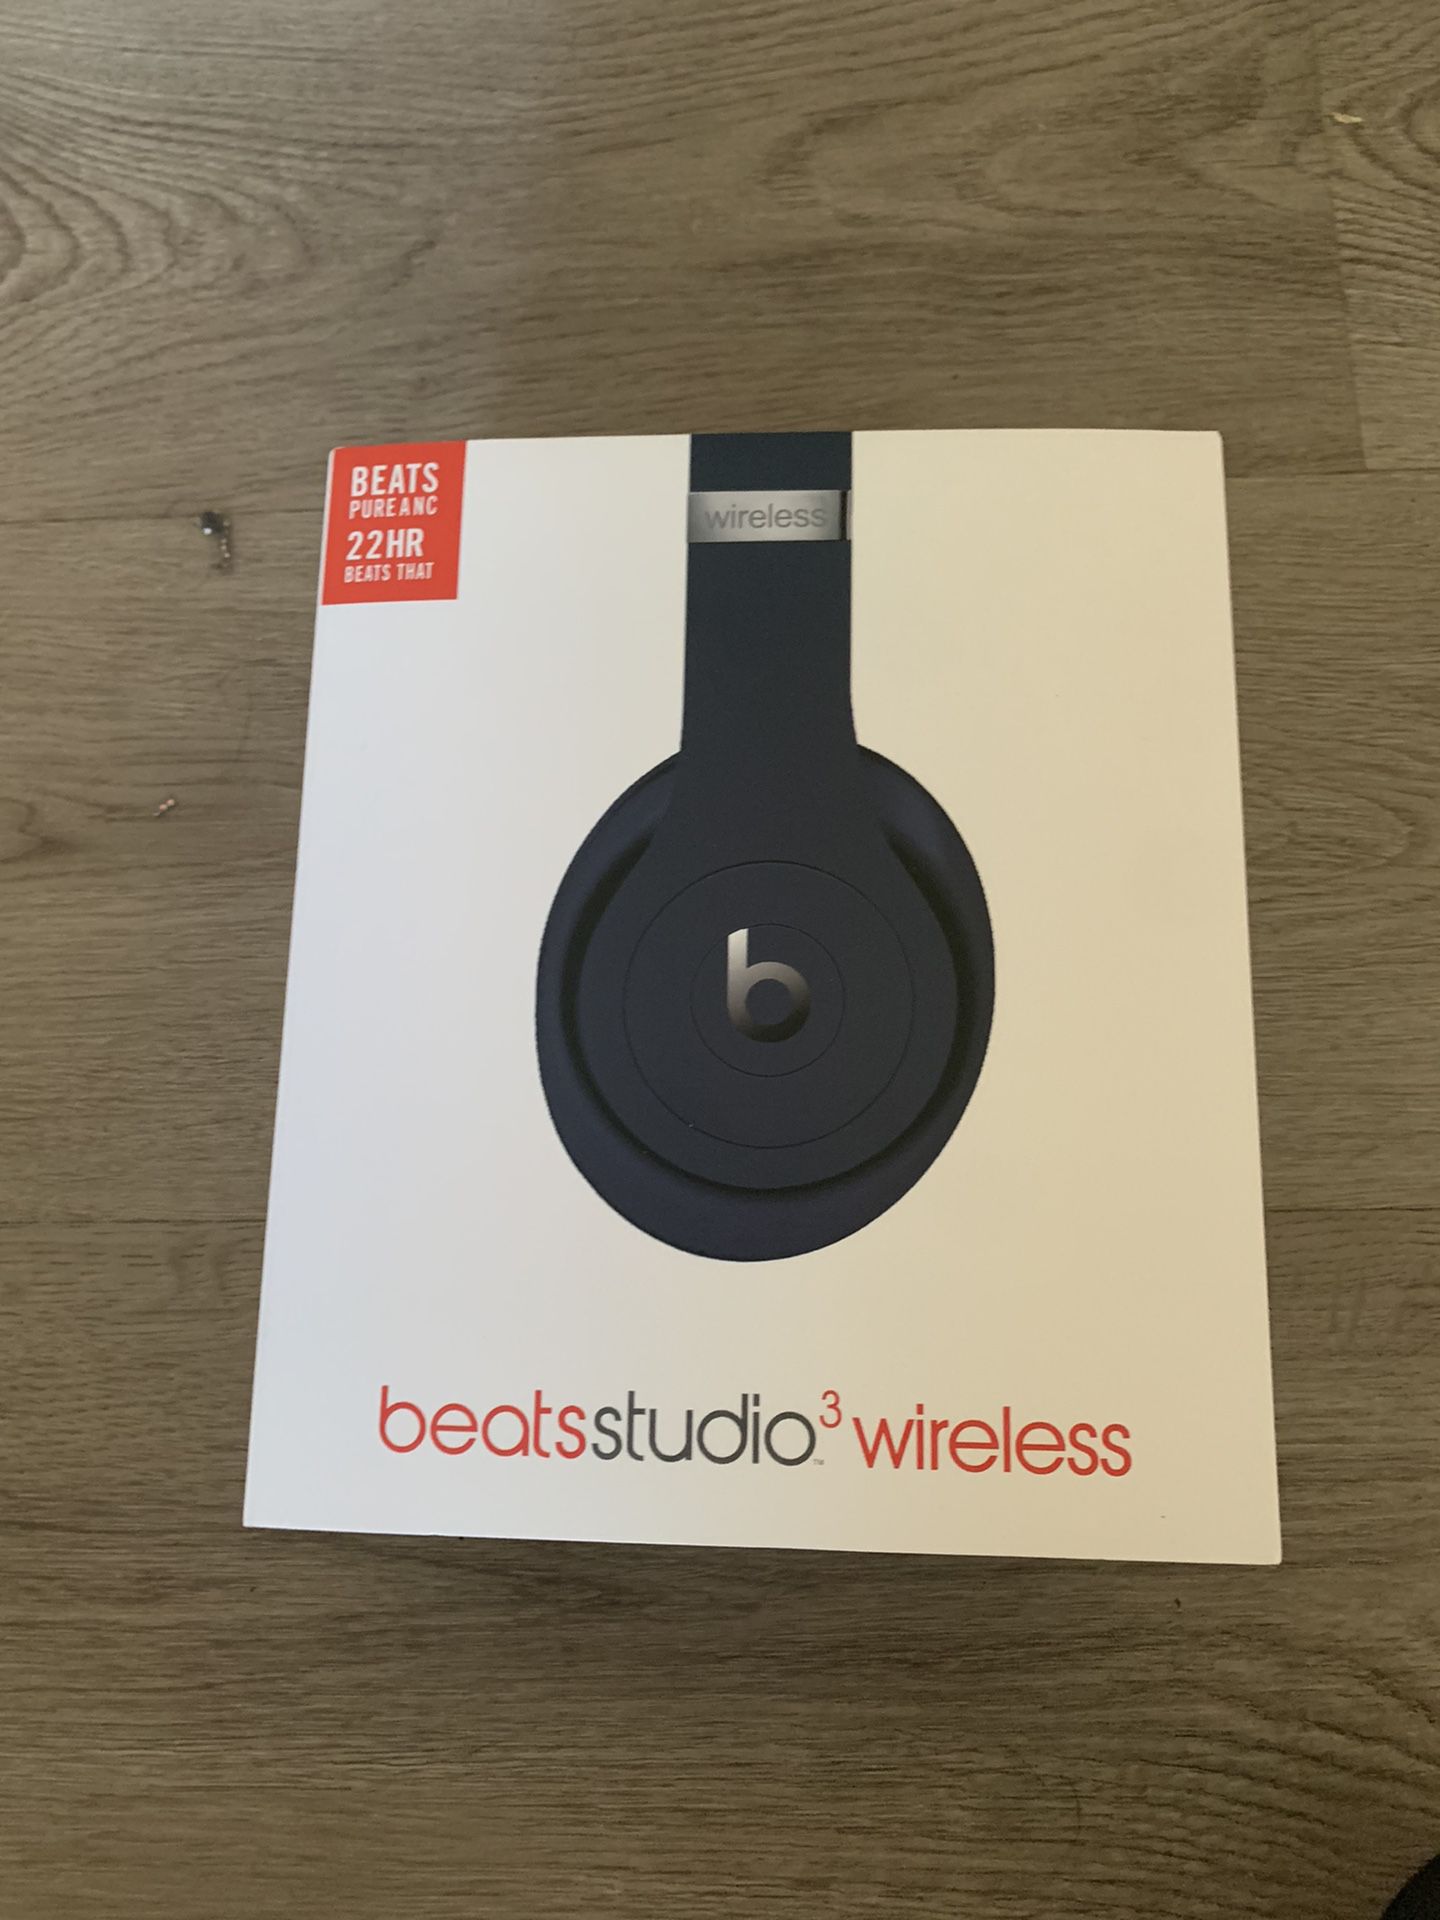 Beats studio 3 Wireless Blue